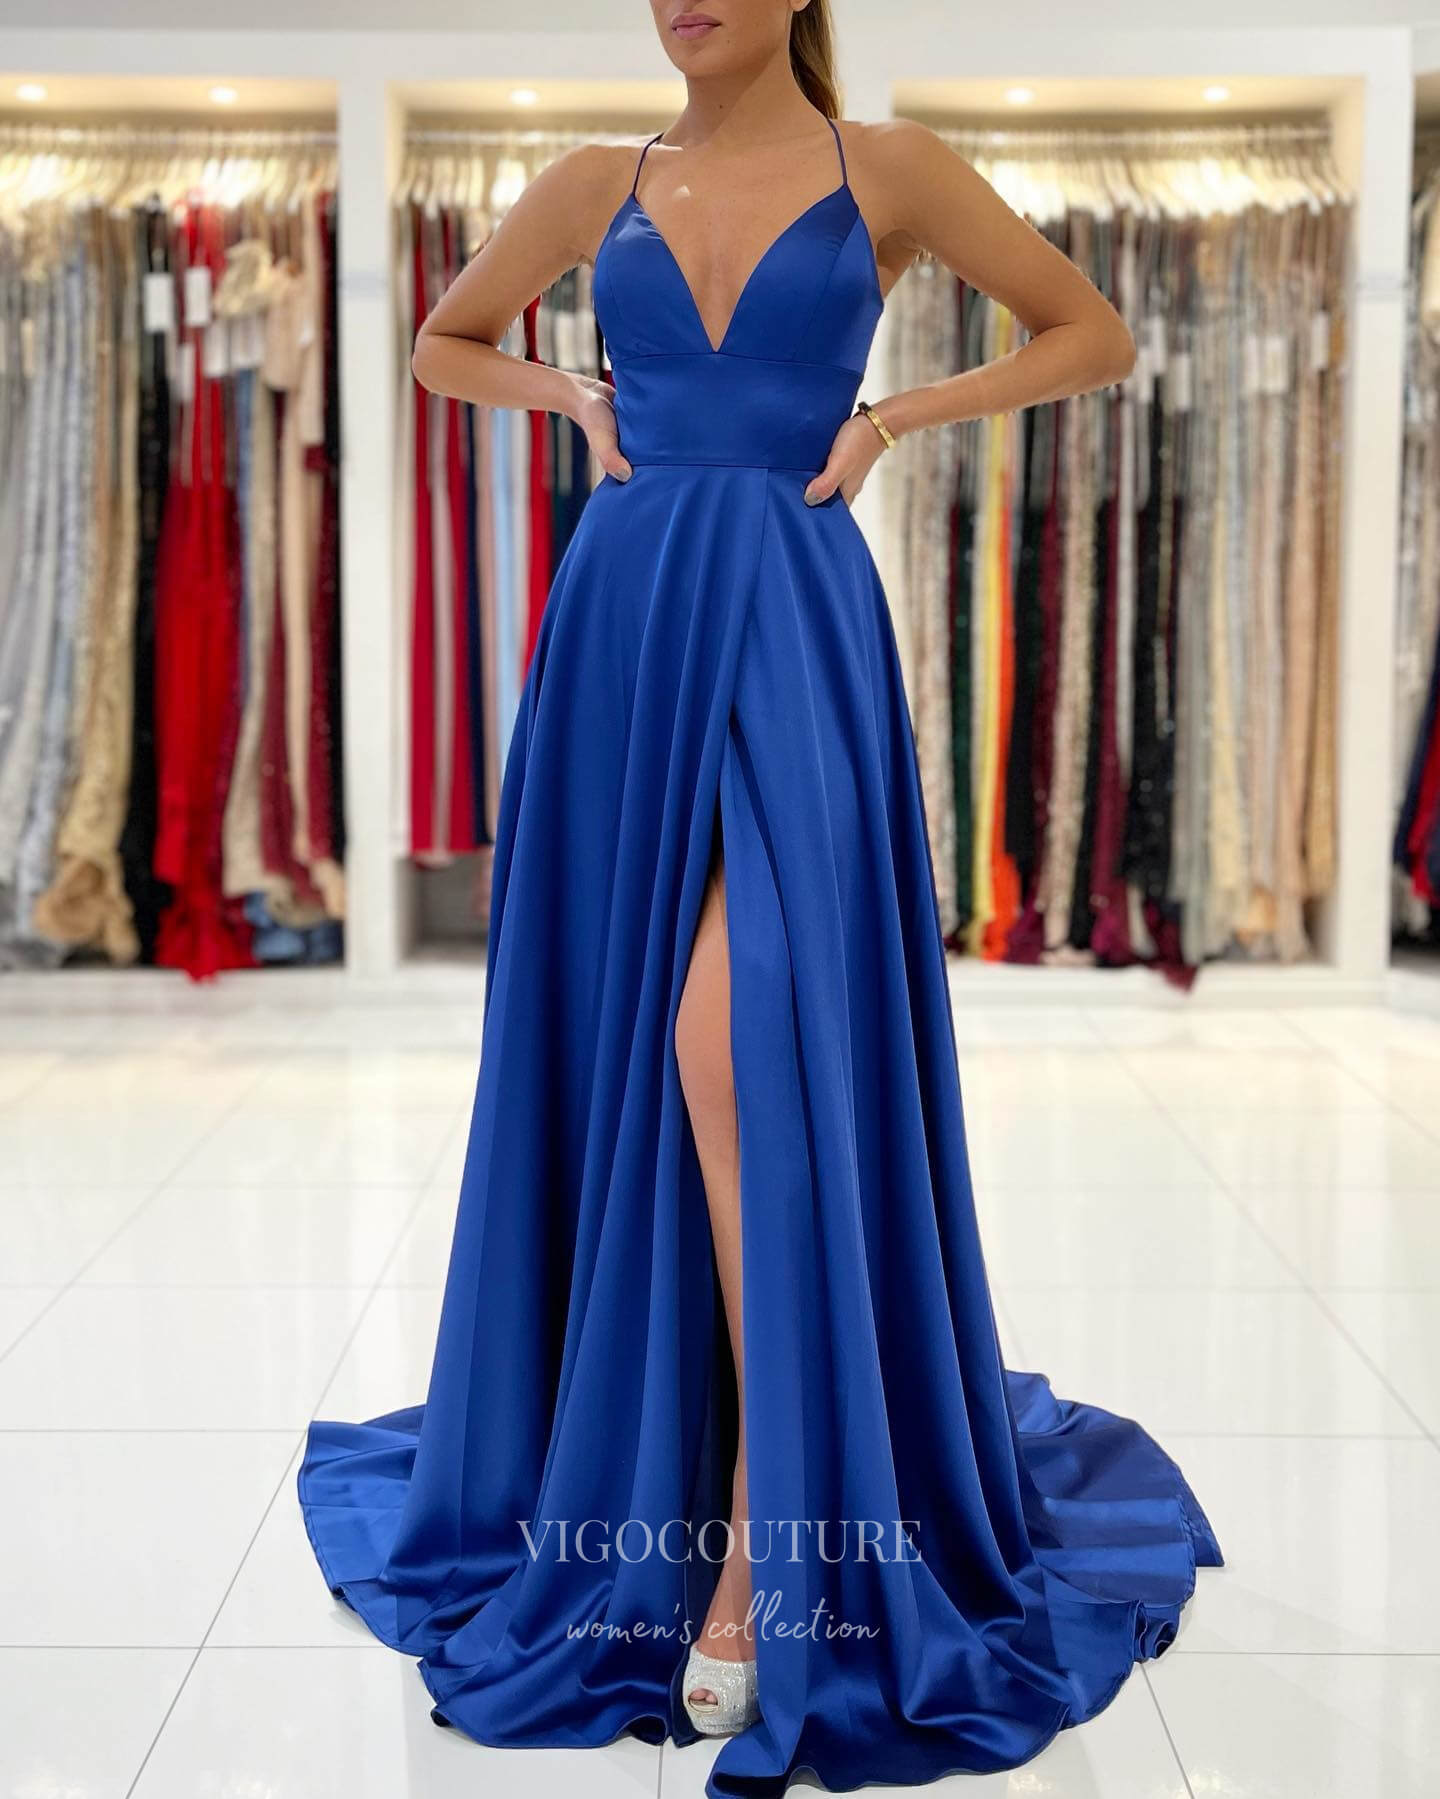 Blue Satin Prom Dresses With Slit Spaghetti Strap A-Line Evening Dress 21811-Prom Dresses-vigocouture-Blue-US2-vigocouture